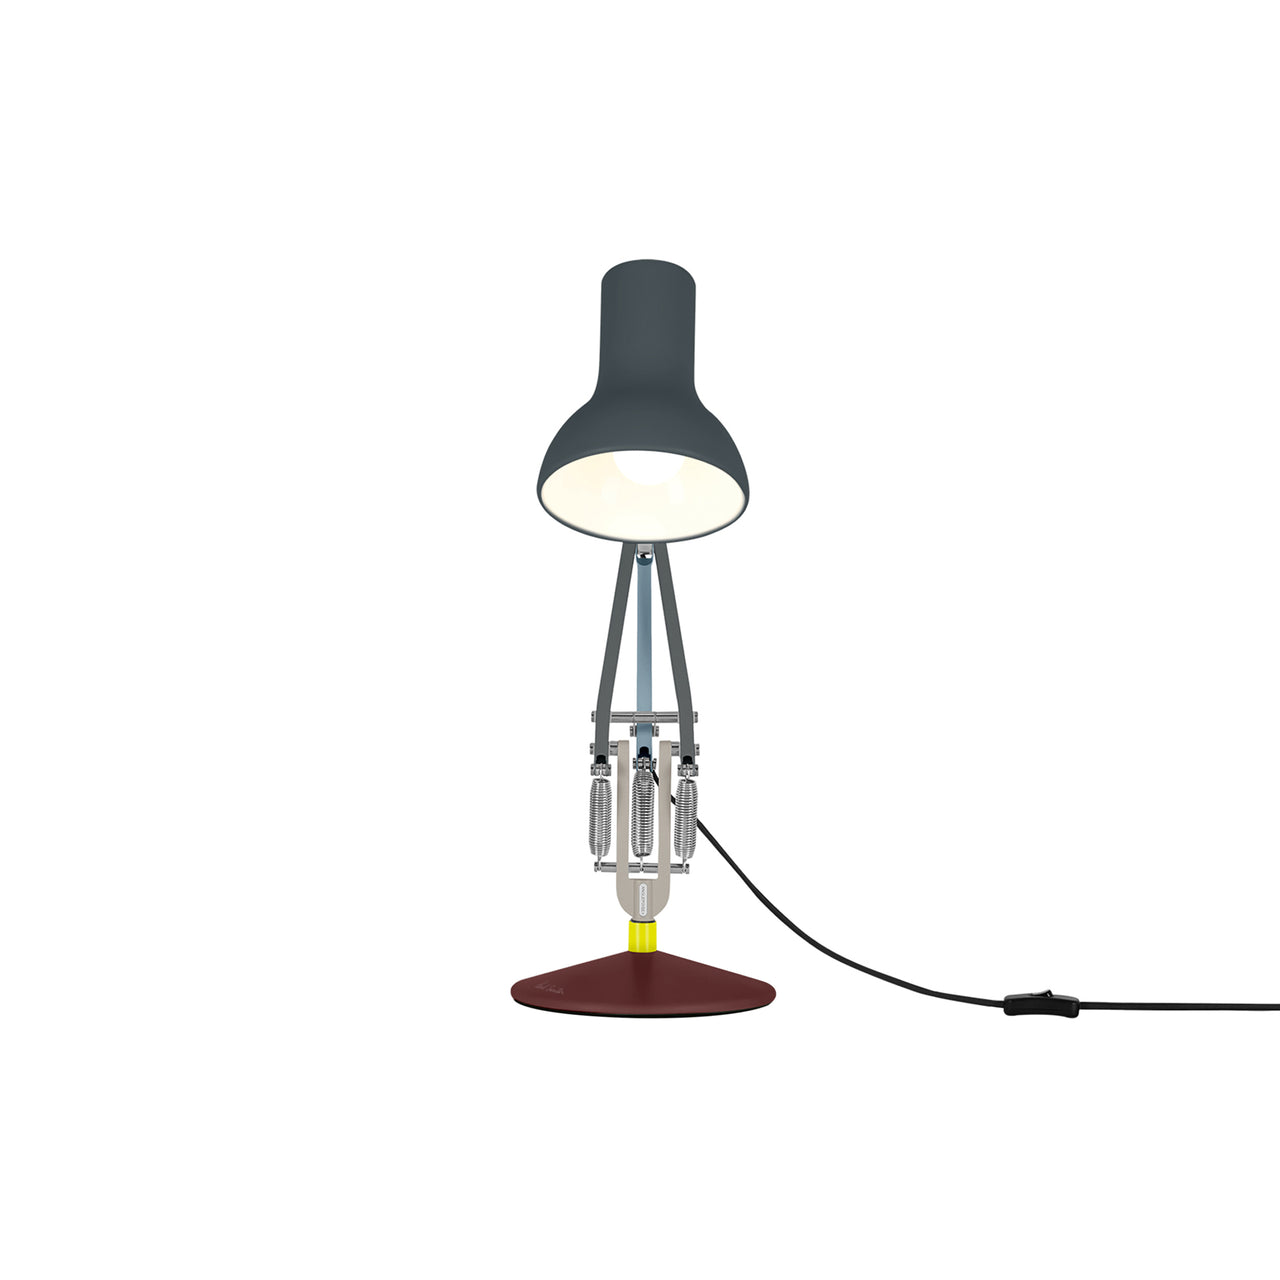 Type 75 Mini Desk Lamp: Paul Smith Edition Four